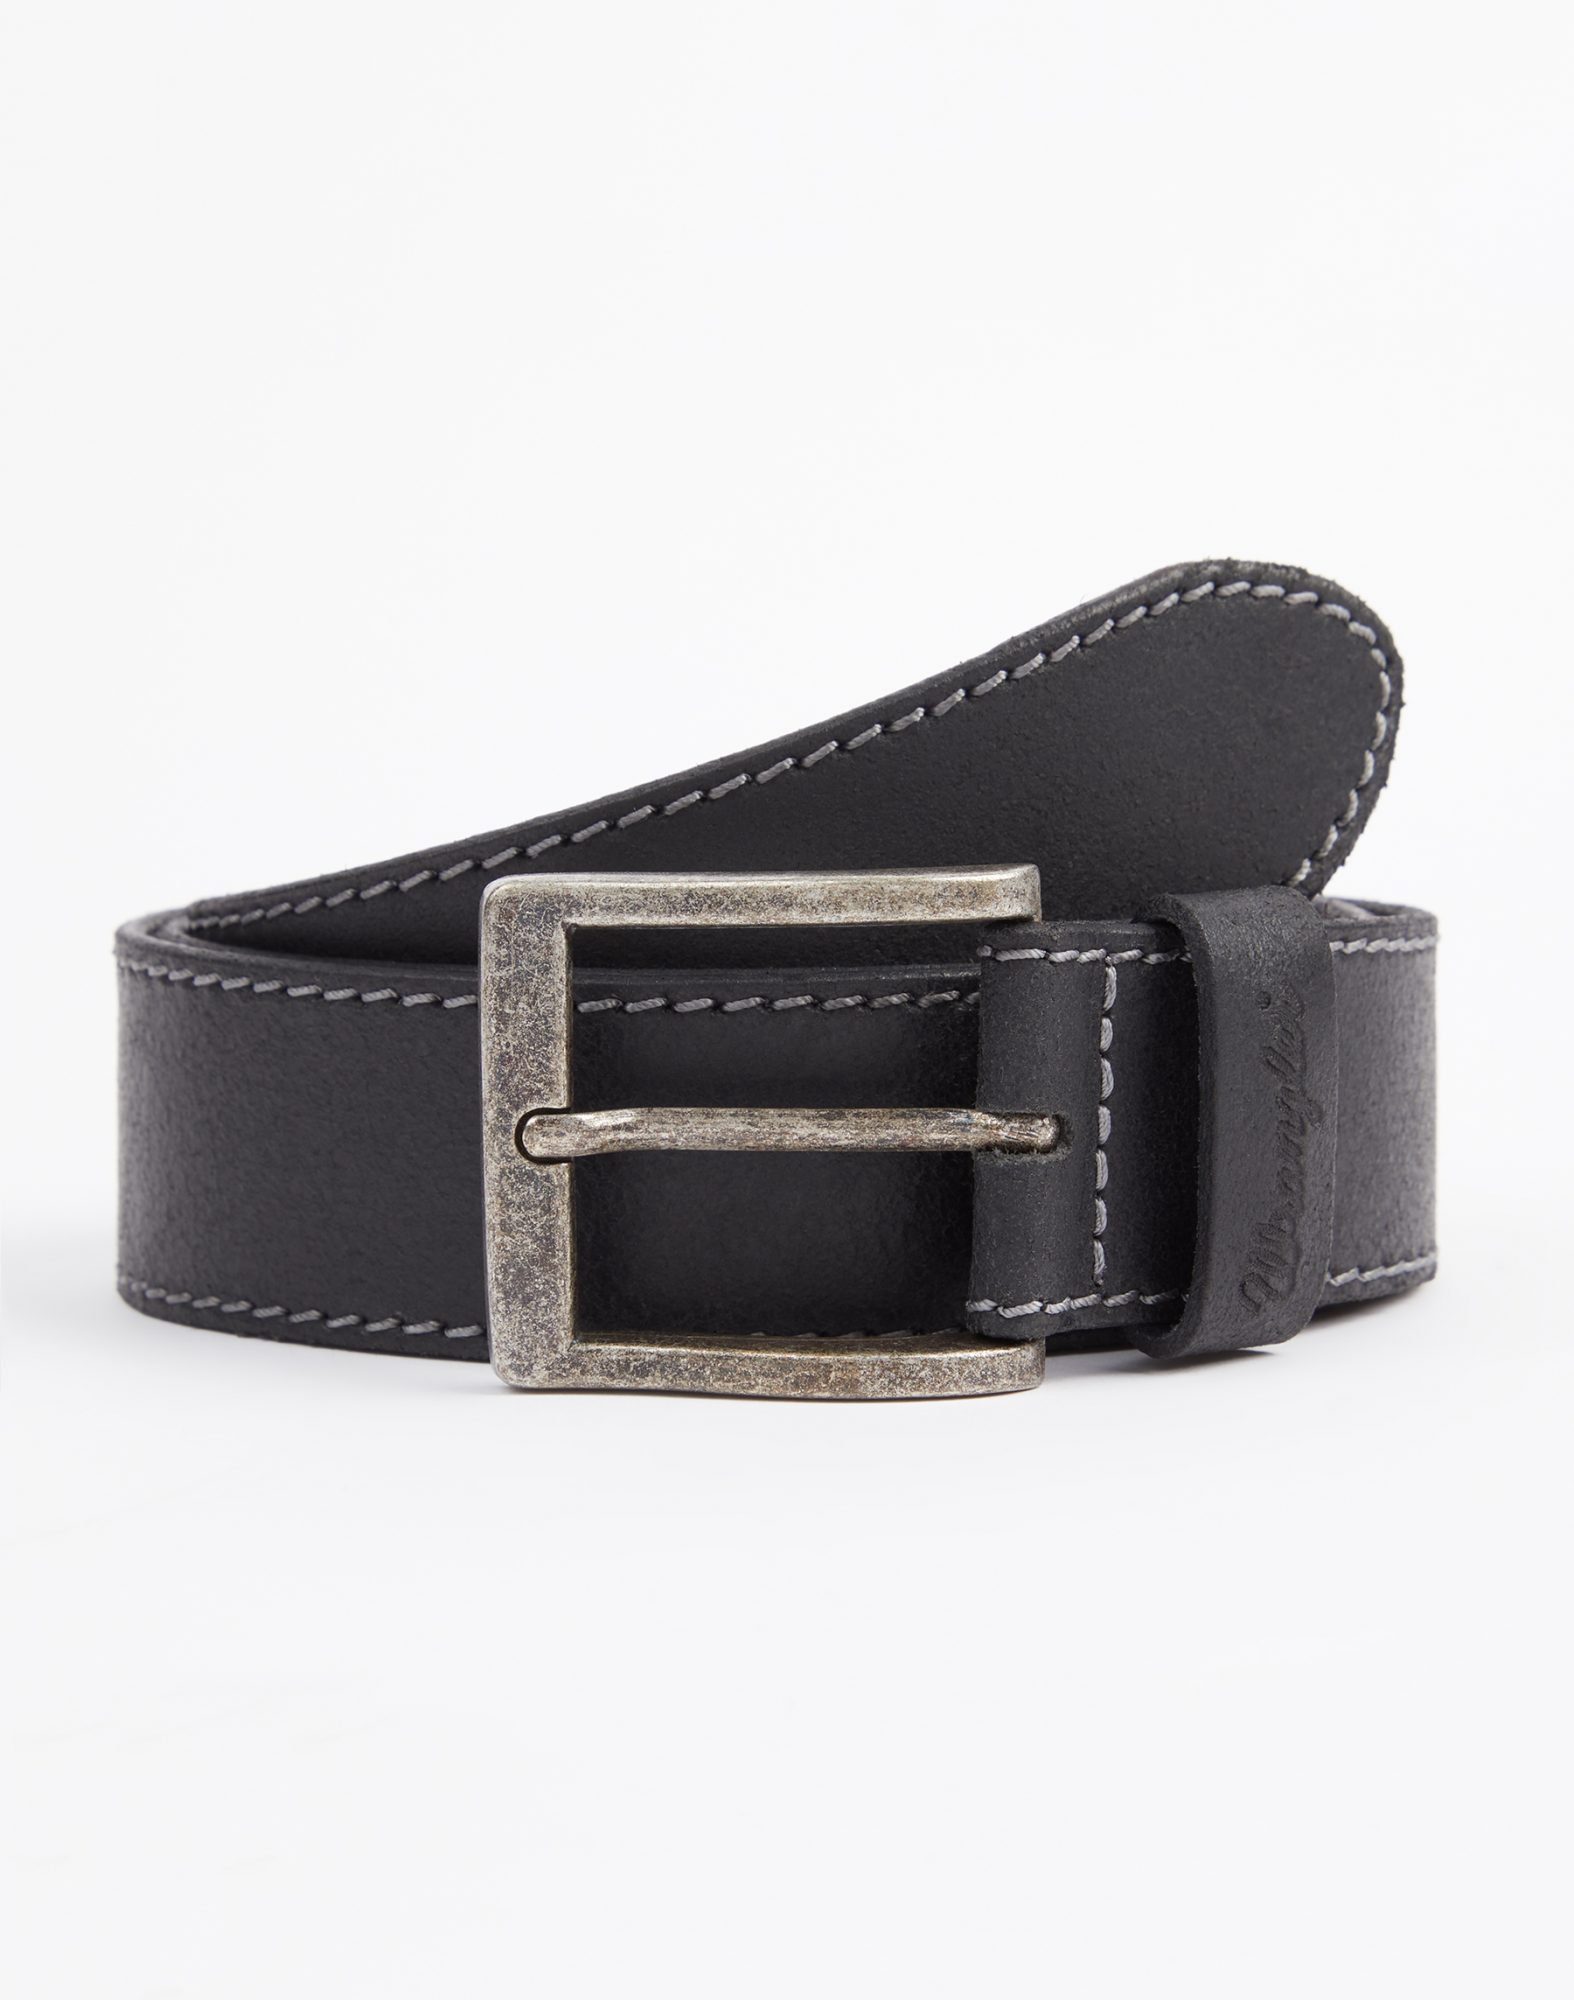 Wrangler Leather Belt Black - Belts - Mole Avon